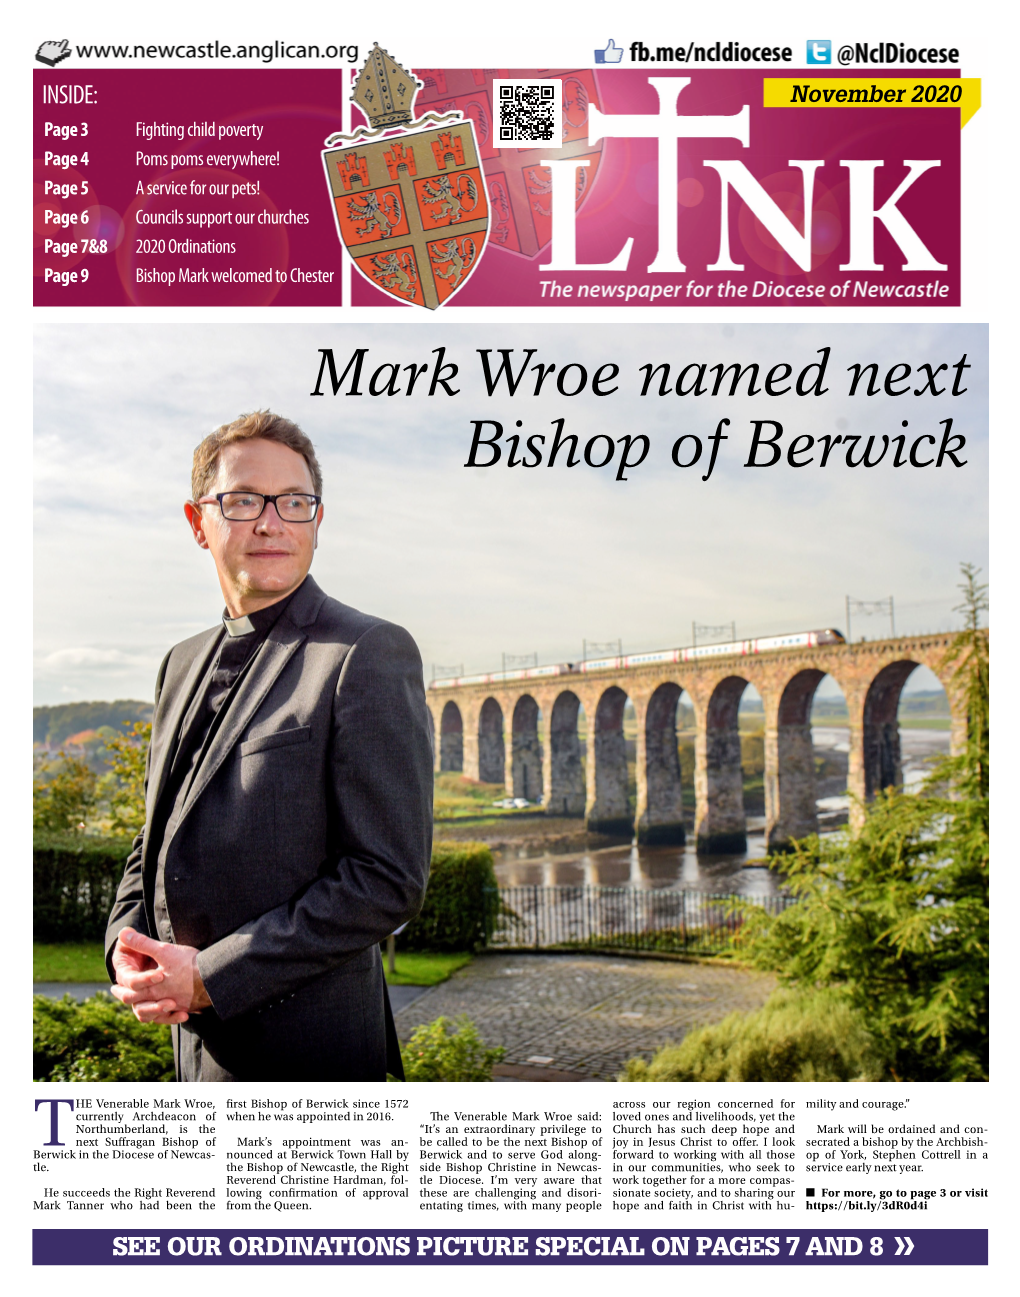 Mark Wroe Named Next Bishop of Berwick